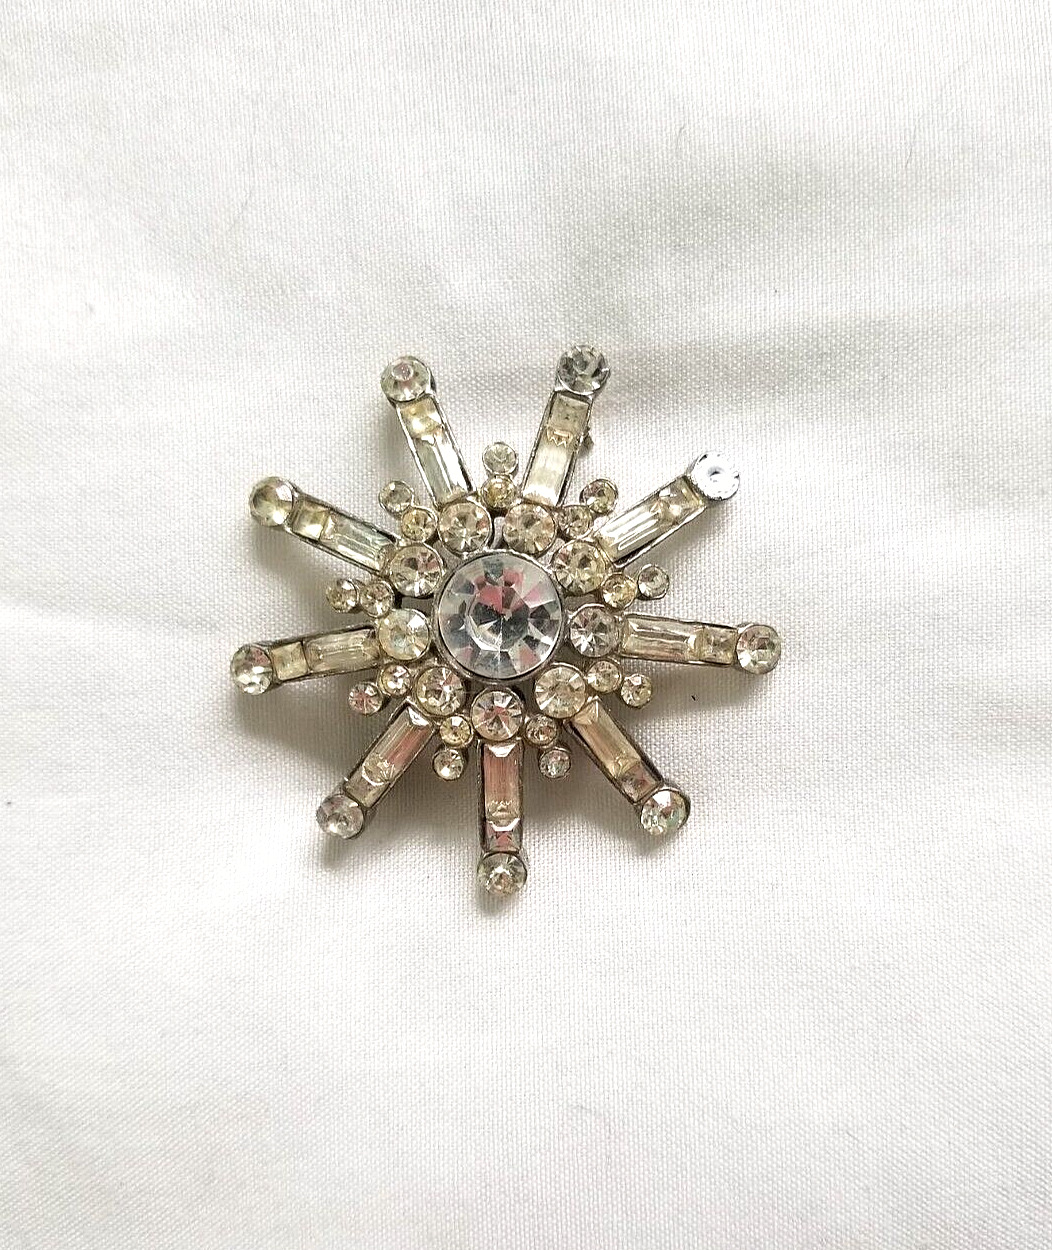 Large Vintage Star Flower Brooch Lapel Pin Silver-Tone Metal & Rhinestone 2 in